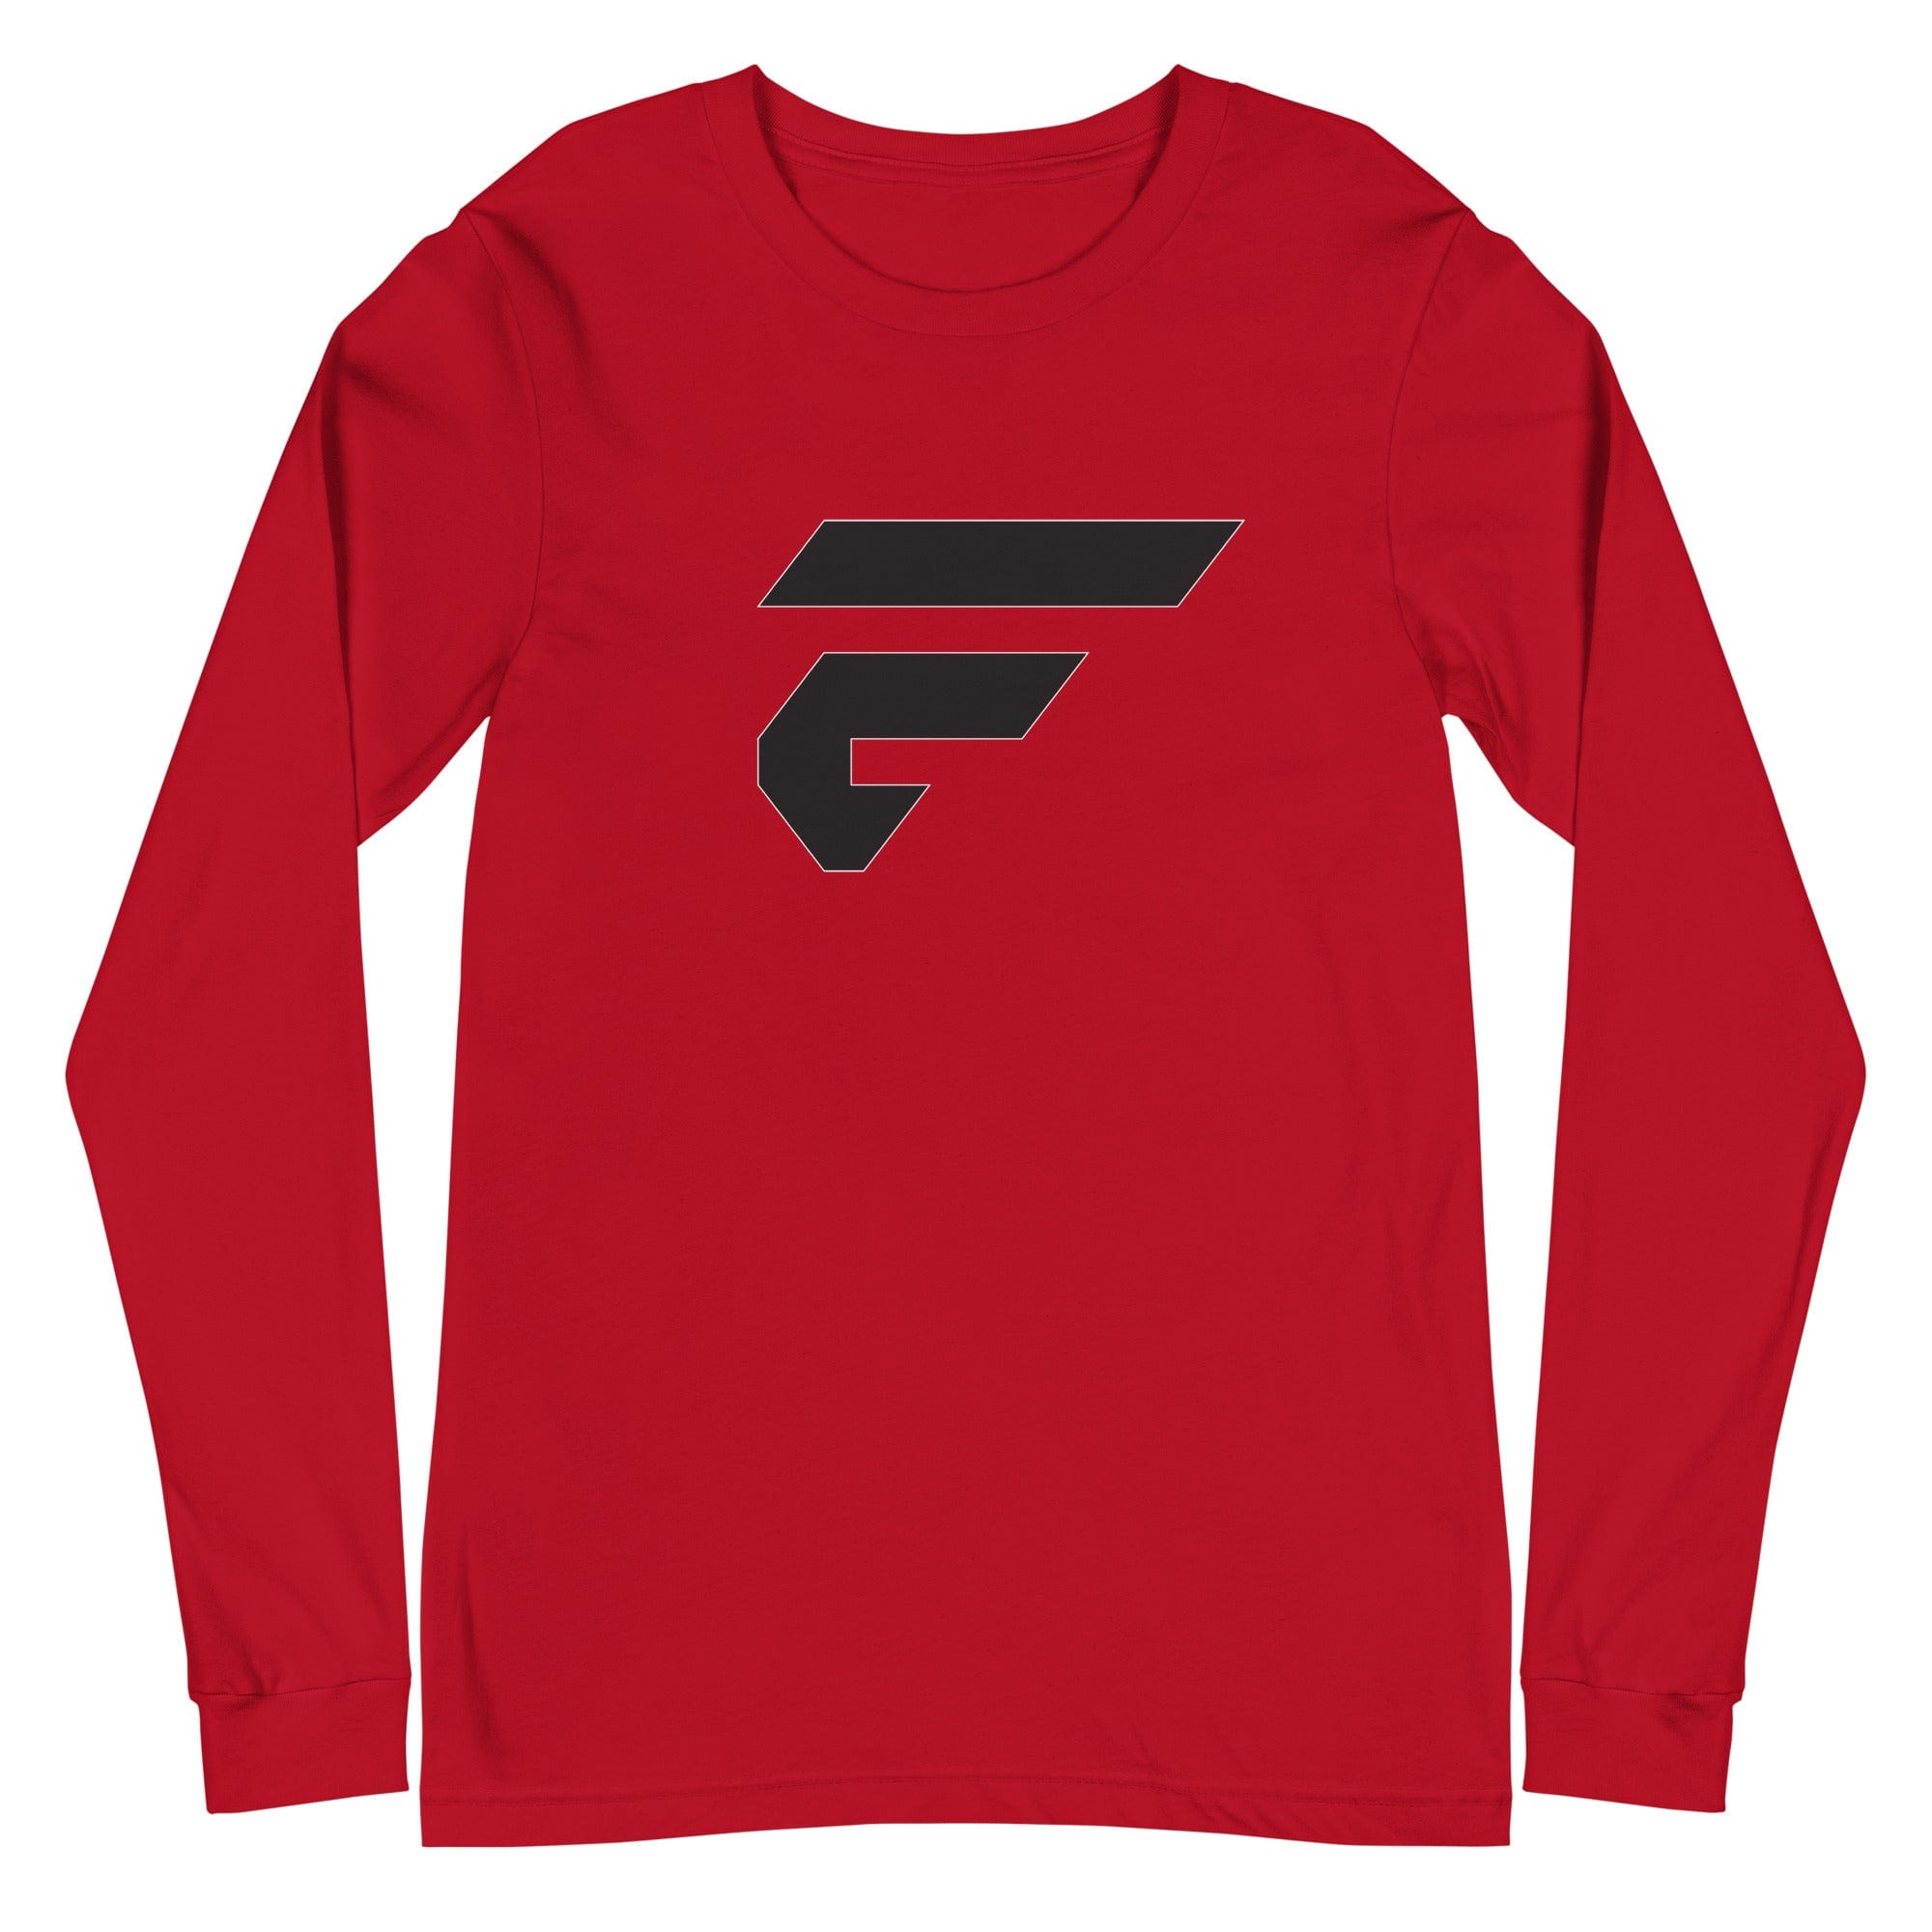 Red unisex cotton longsleeve shirt with Fire cornhole F logo in black